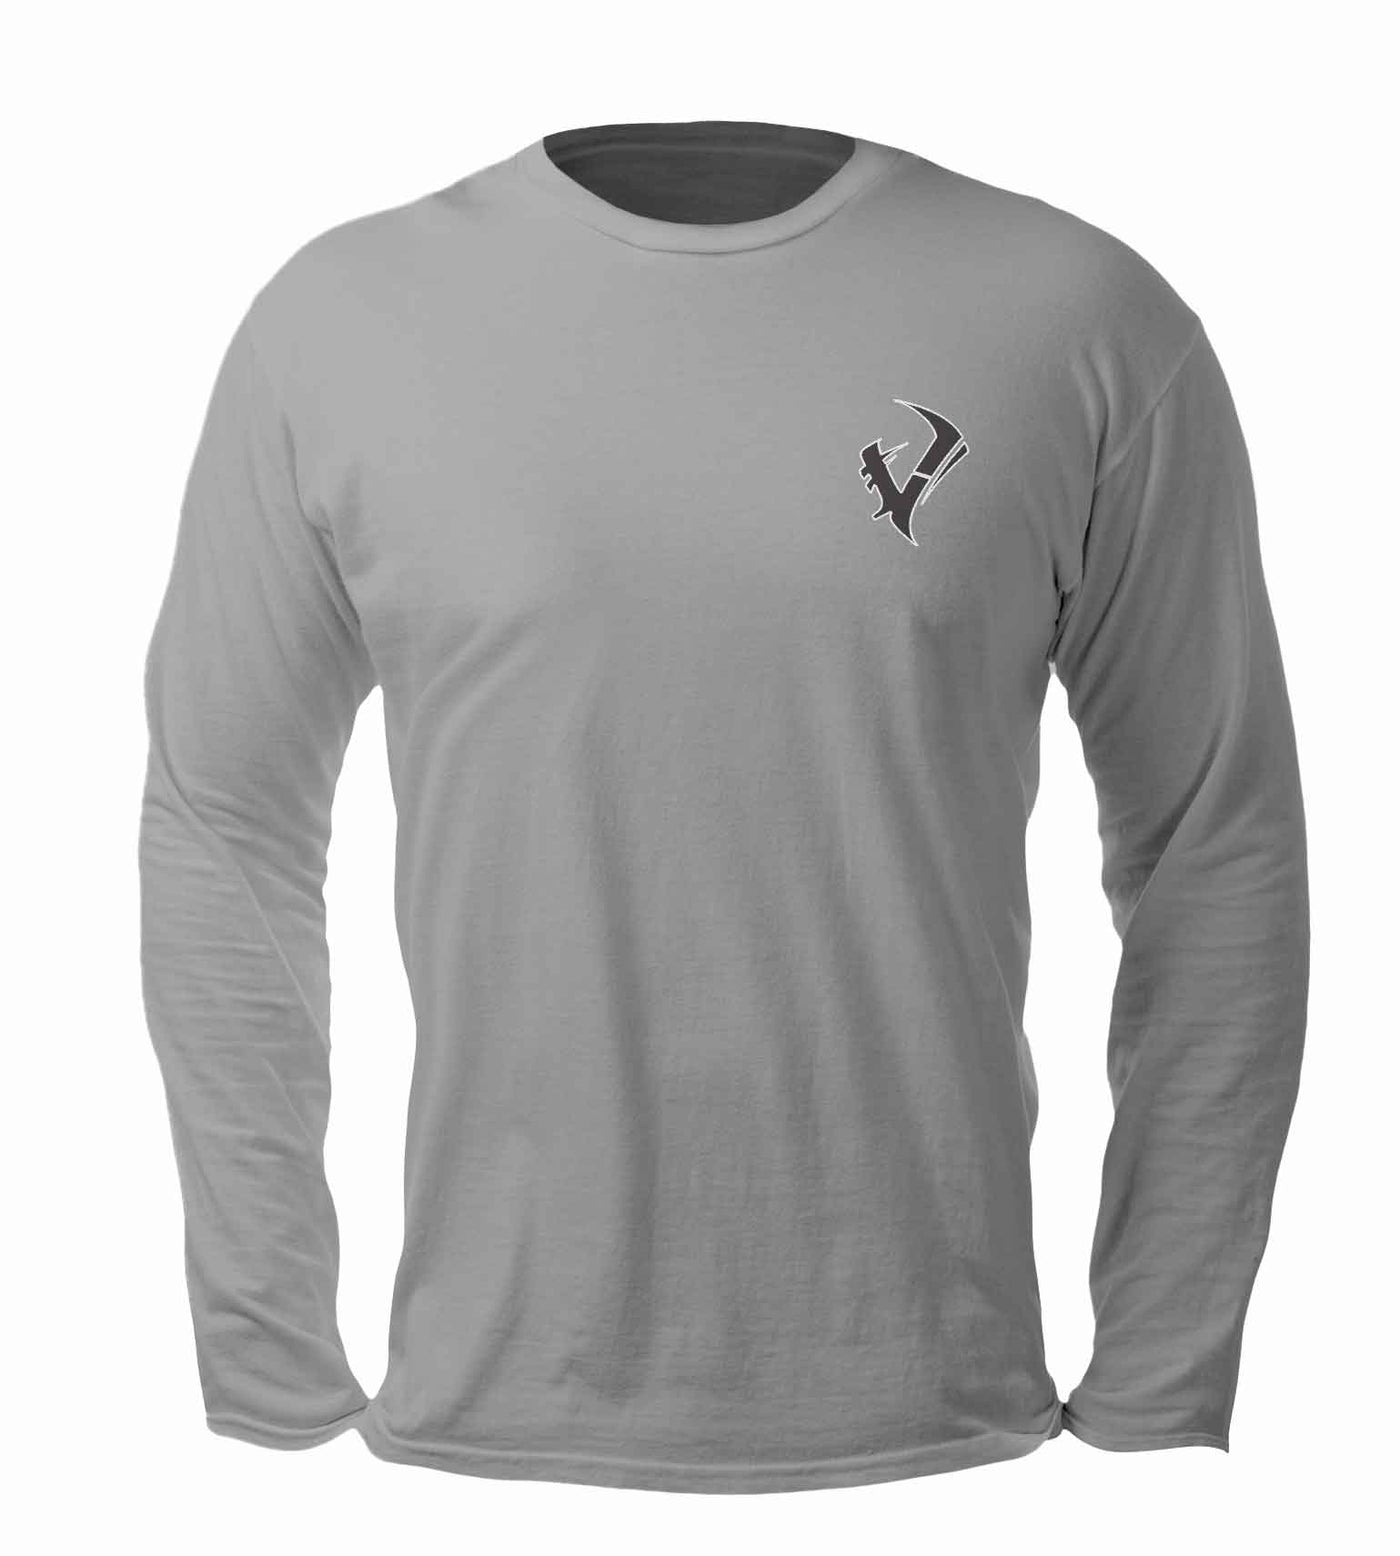 Vycah Trike Shirt - Gray